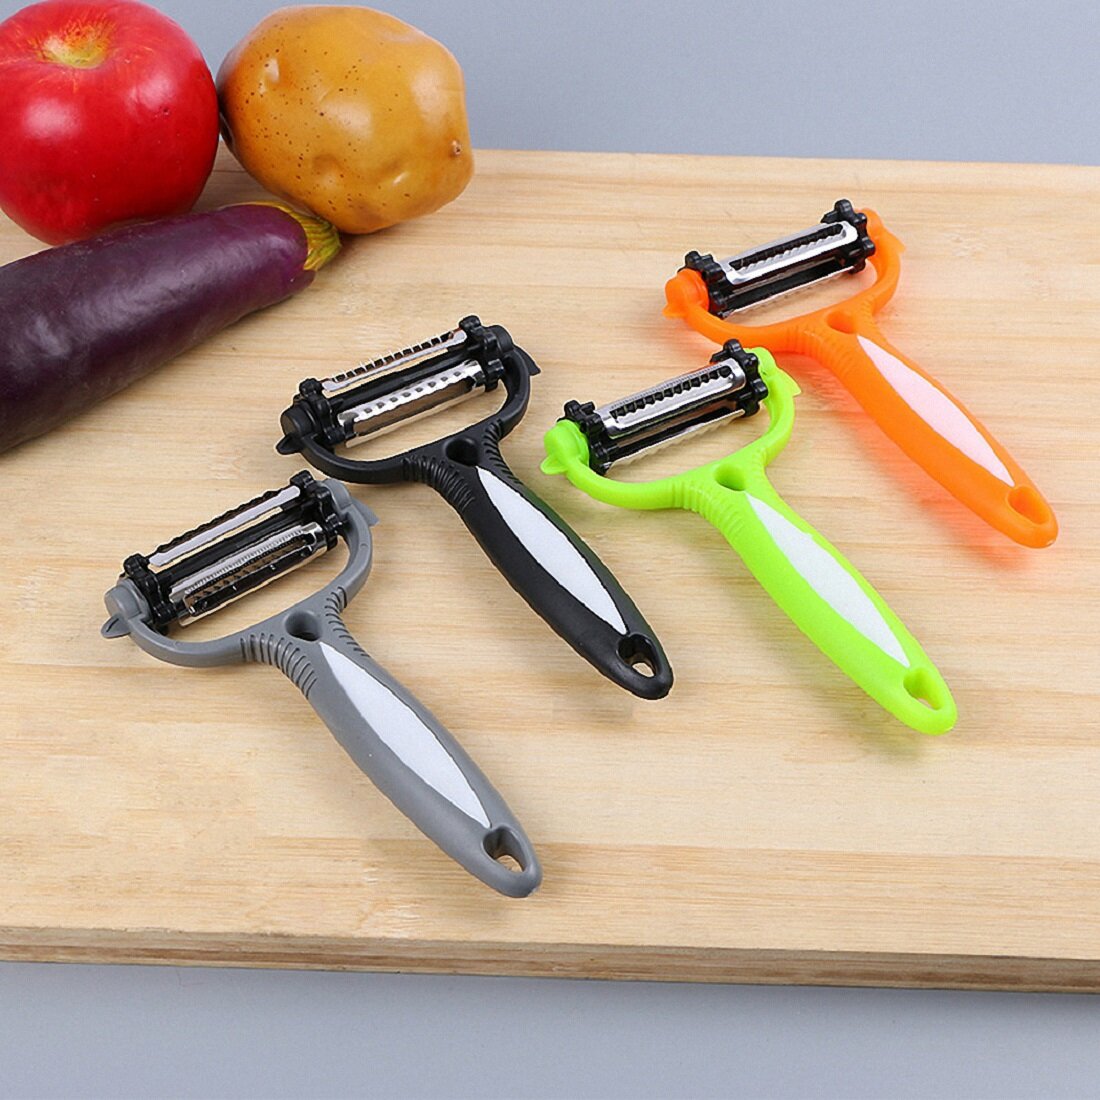 rotary vegetable peeler